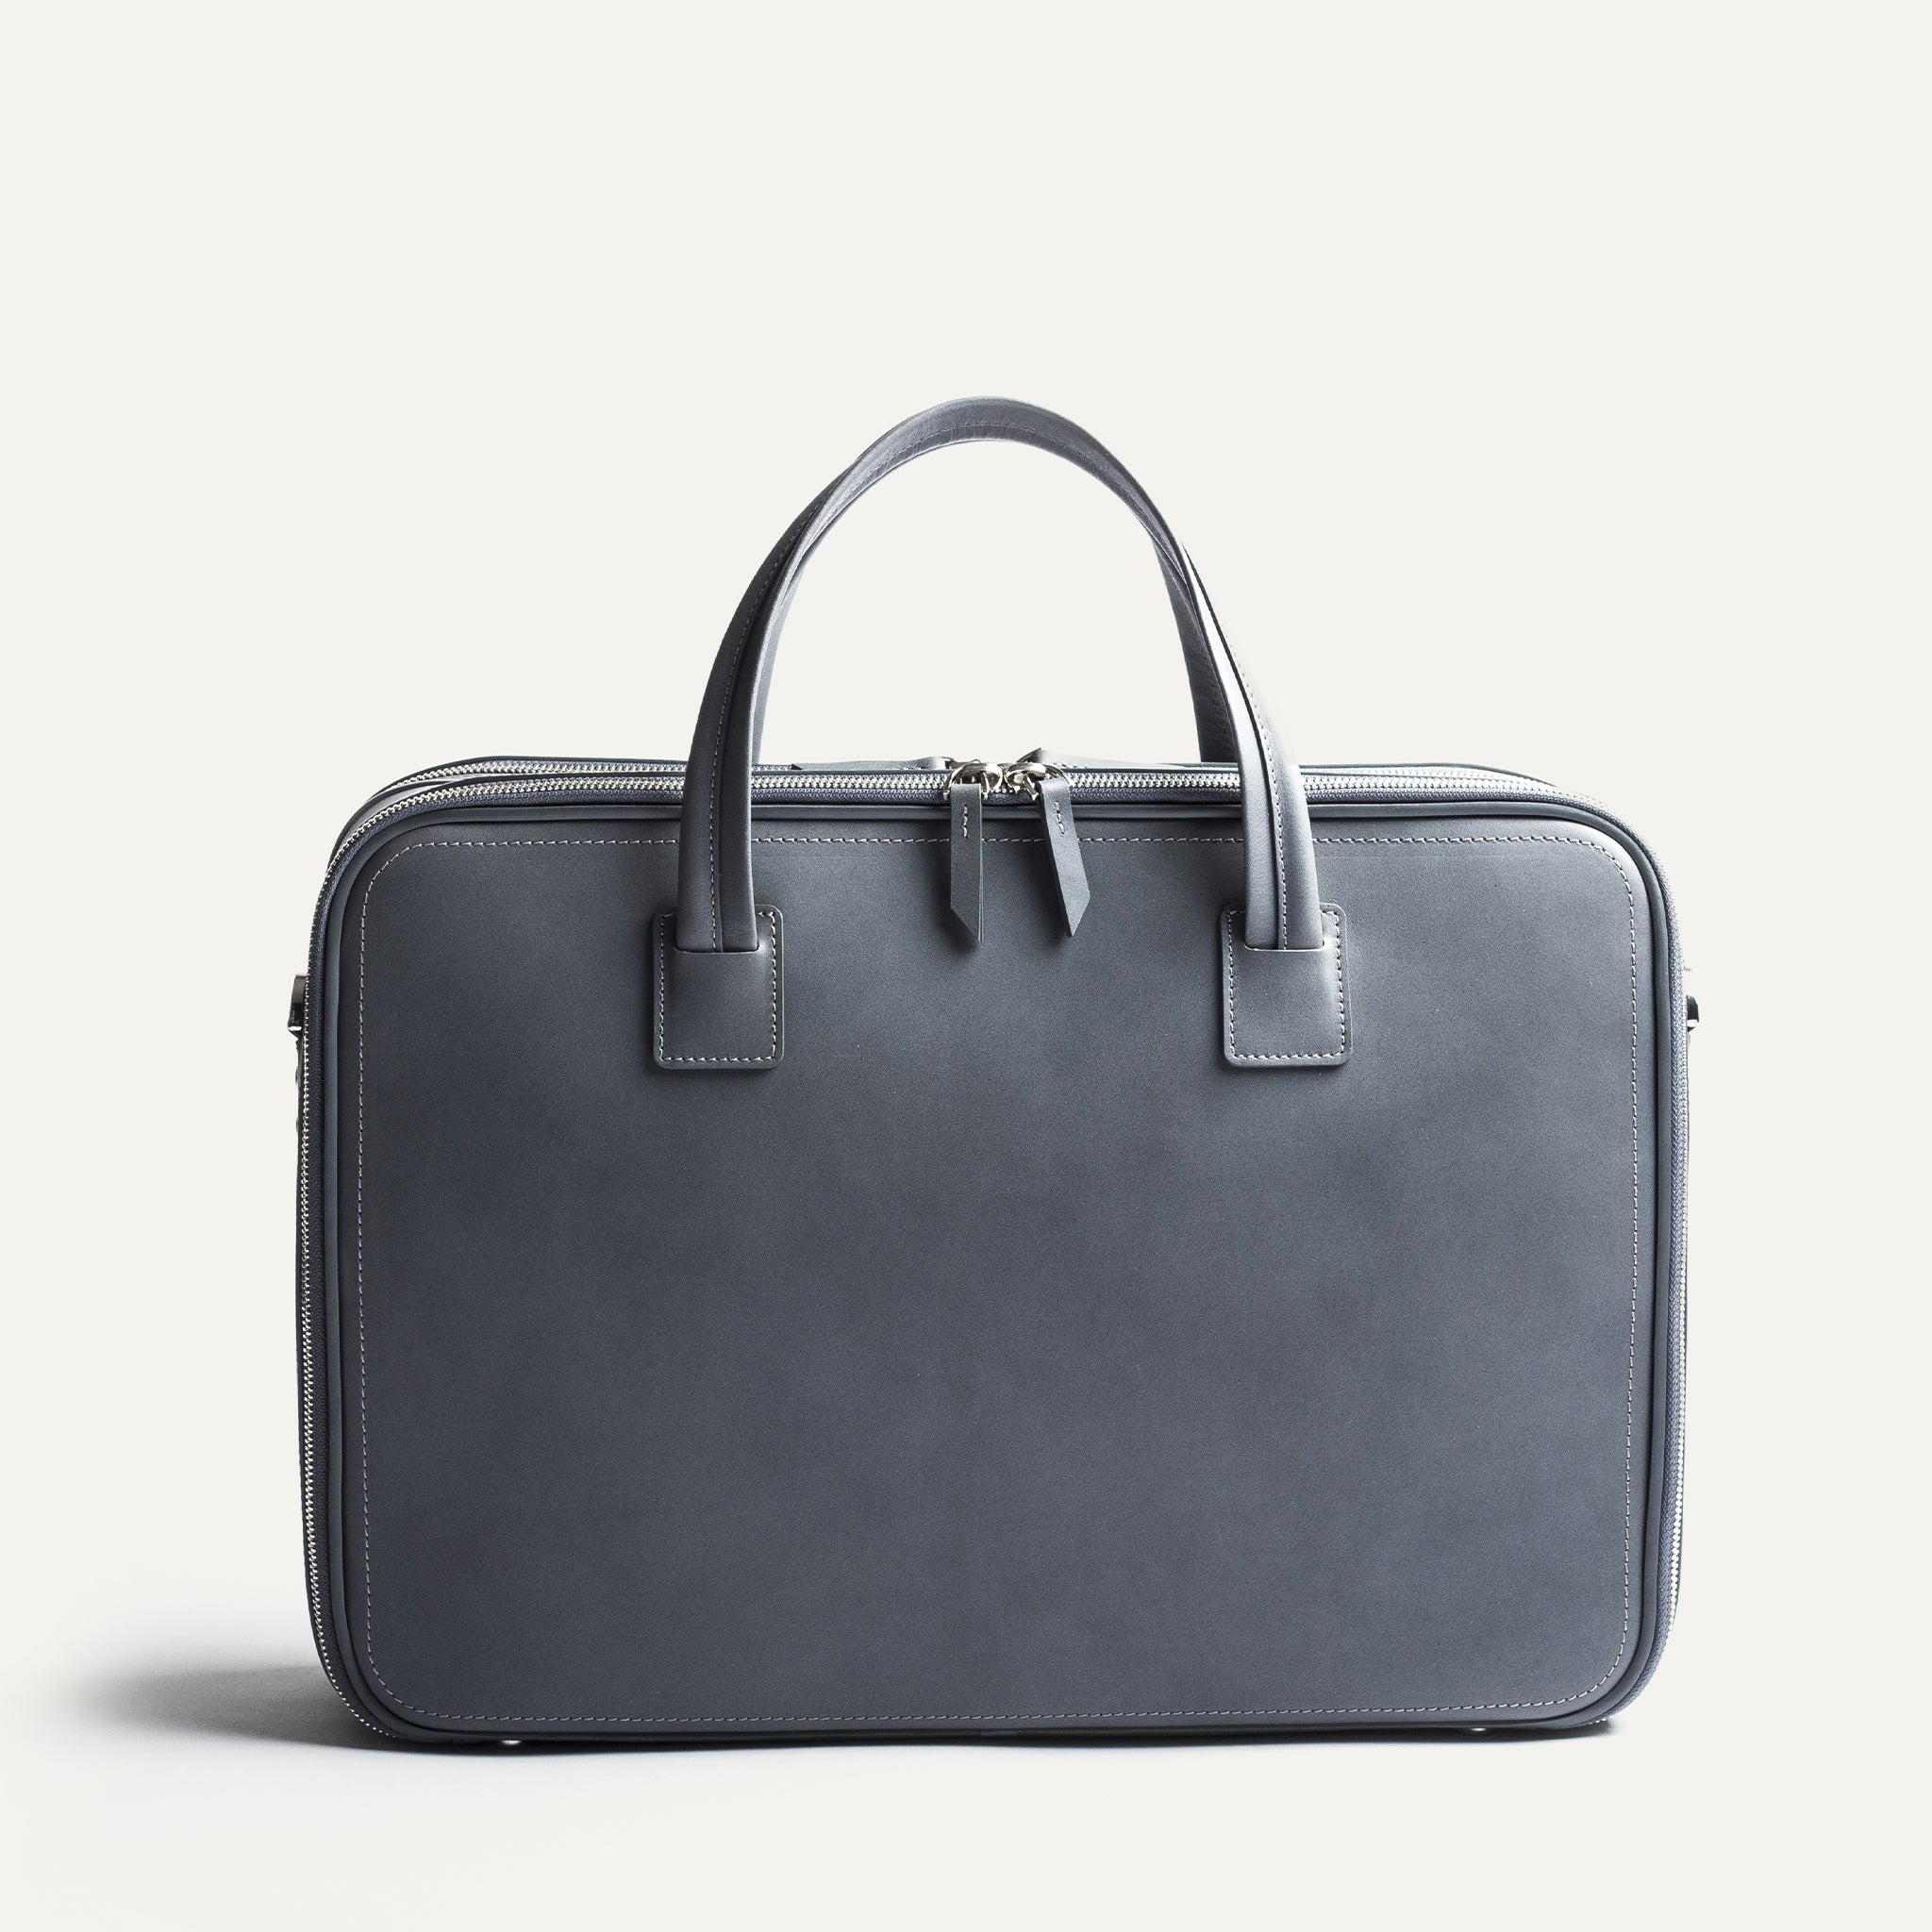 lundi 36-hour Travel bag | BELLECOURT Gray